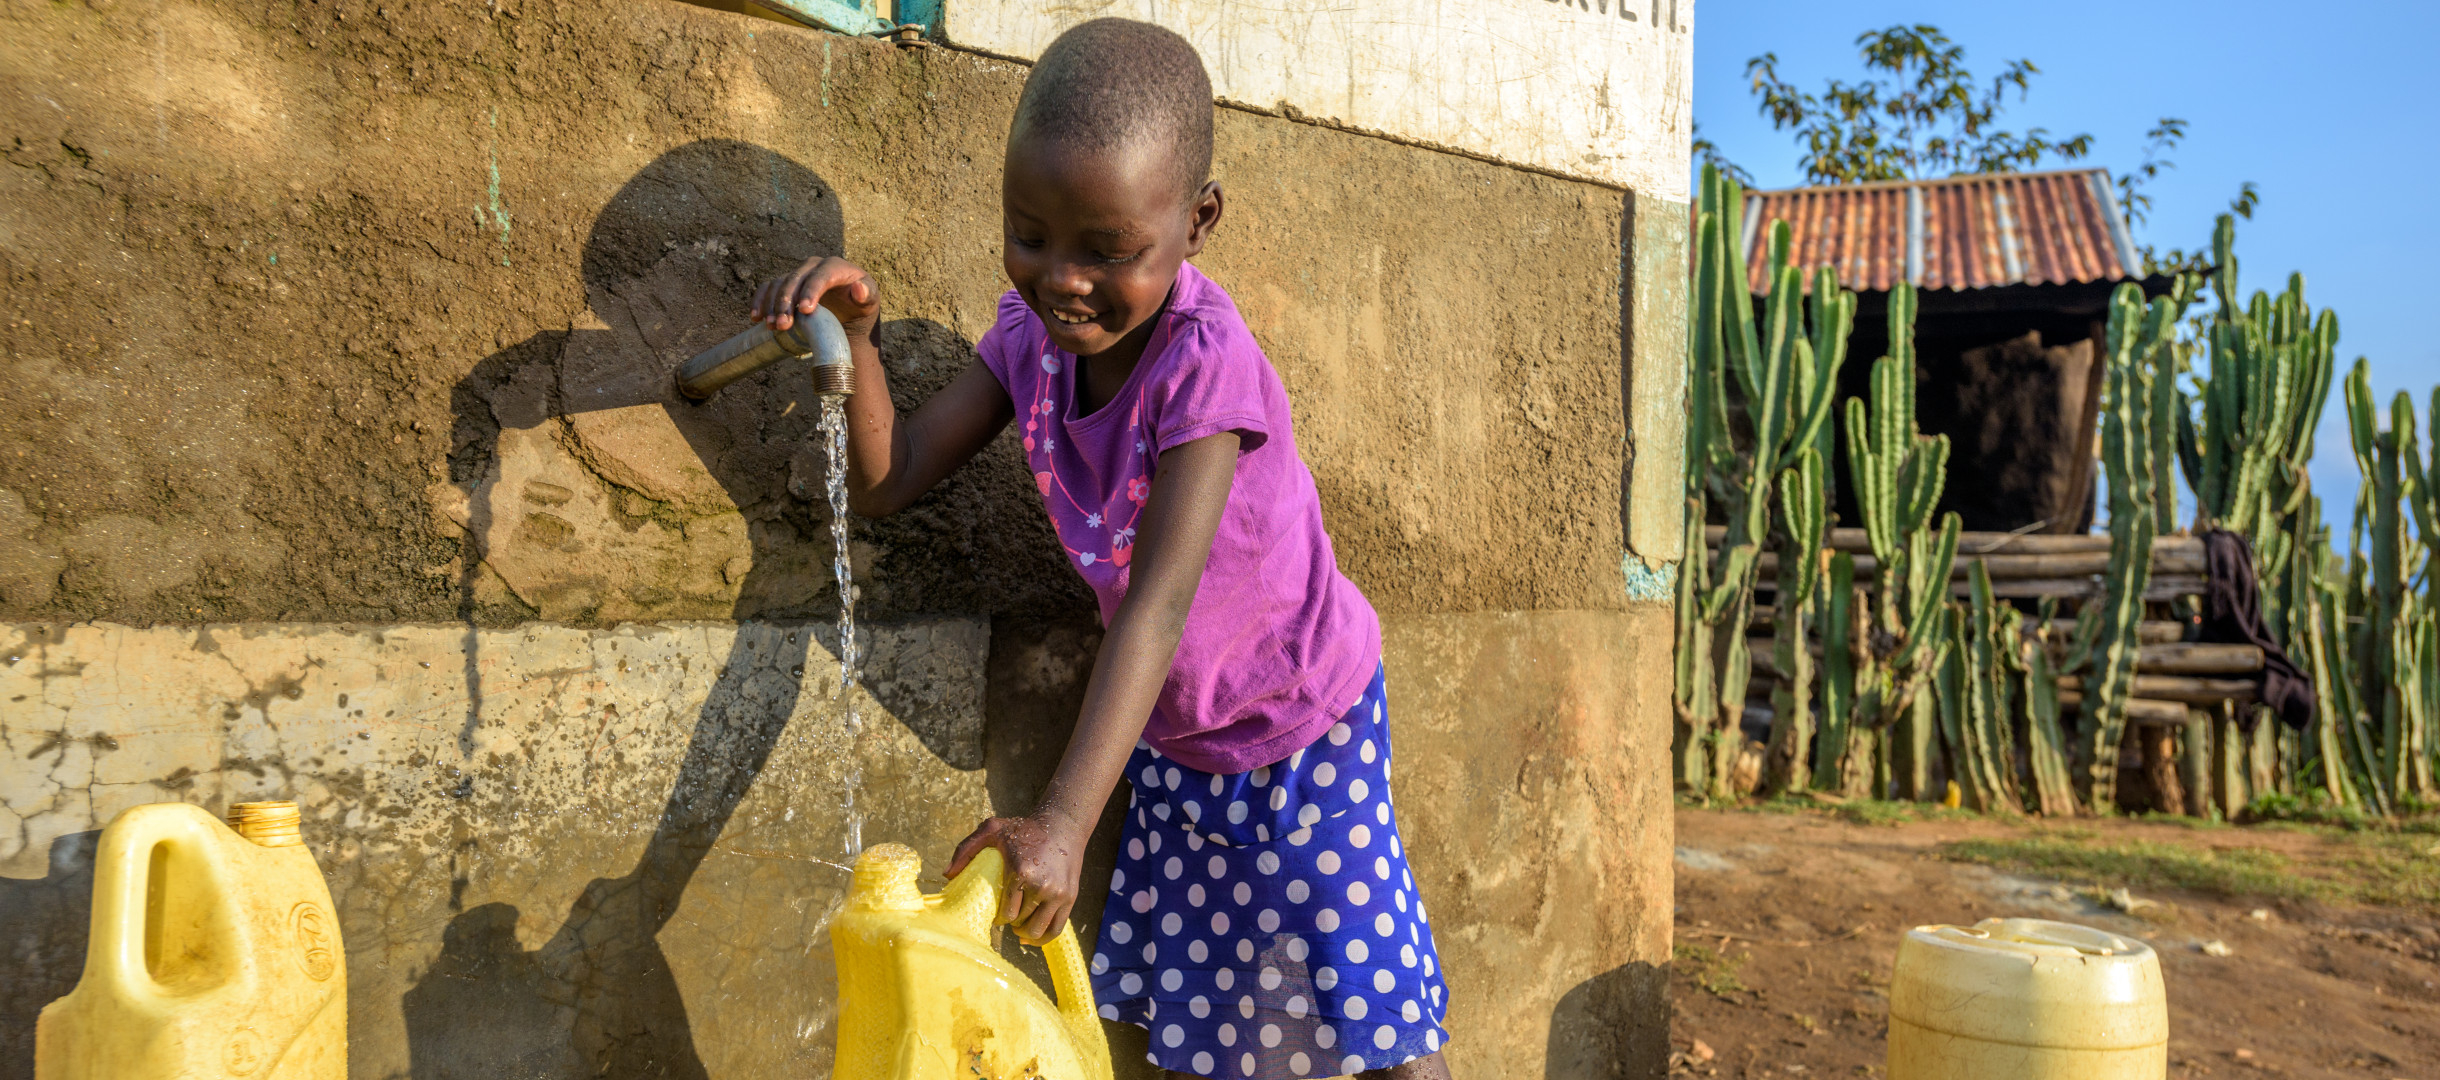 Patenkind Kamama aus Kenia zapft Trinkwasser